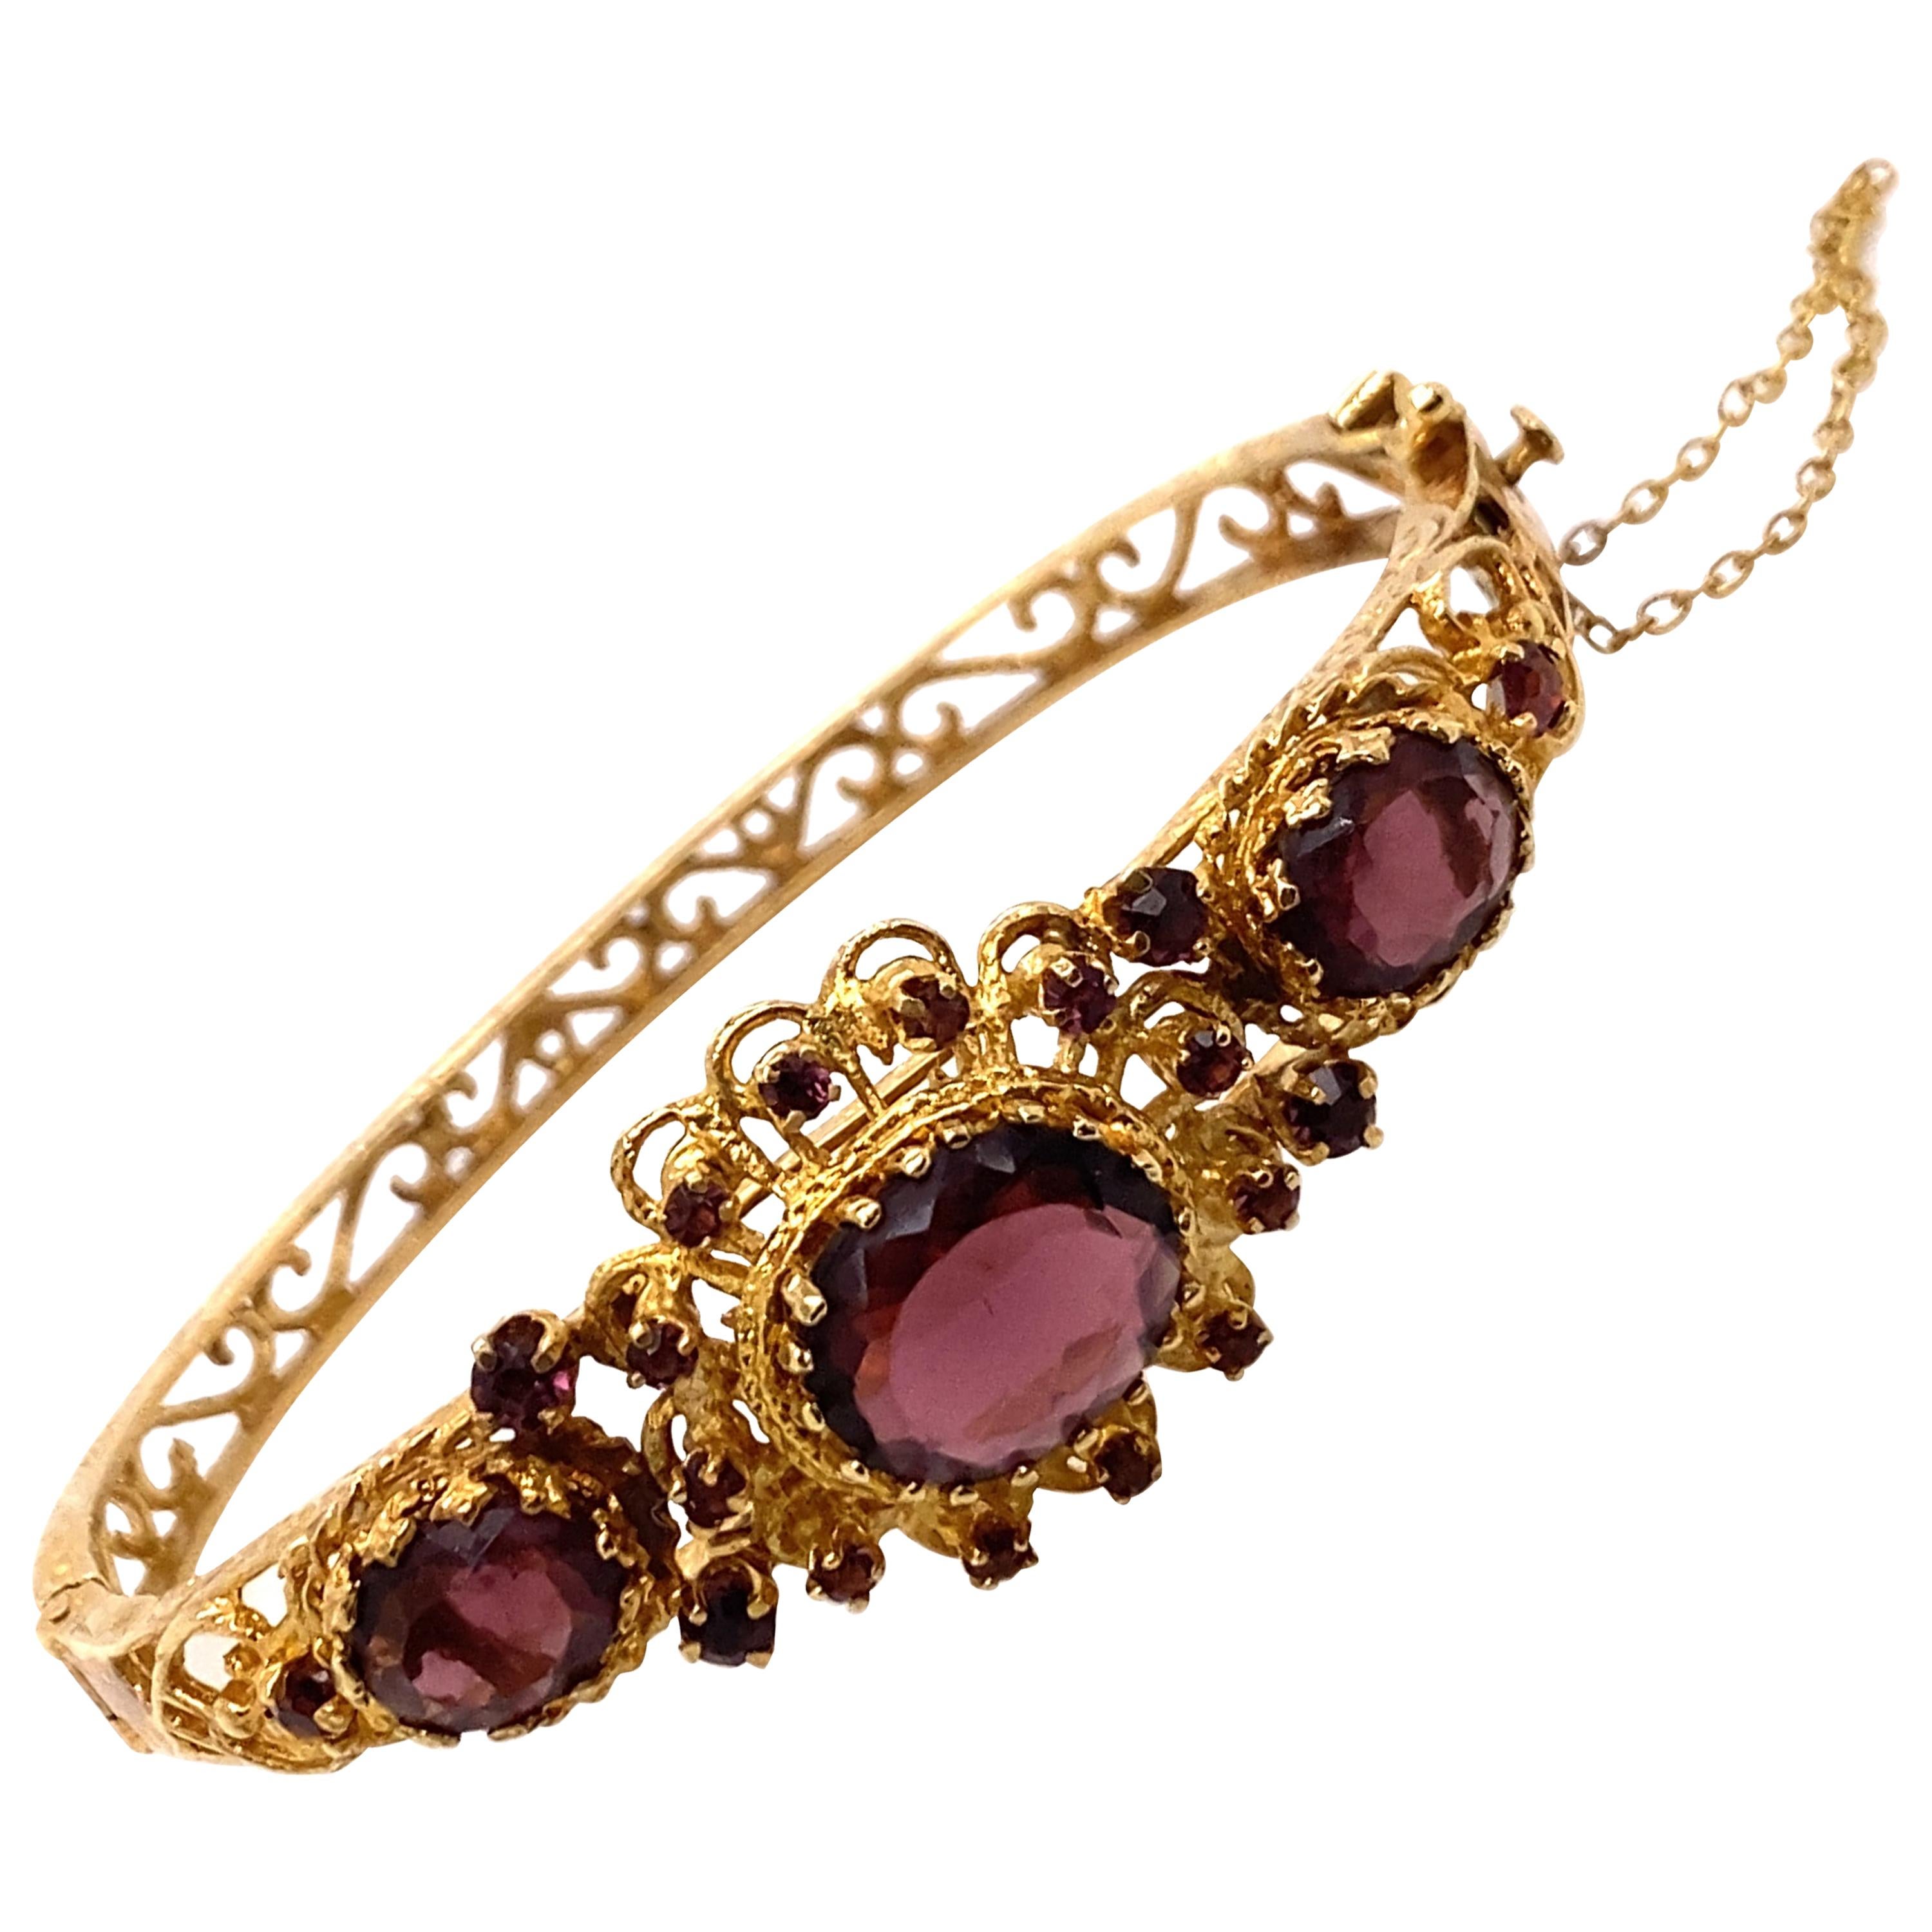 Vintage 1960's 14K Yellow Gold Bangle Bracelet with Purple Stones